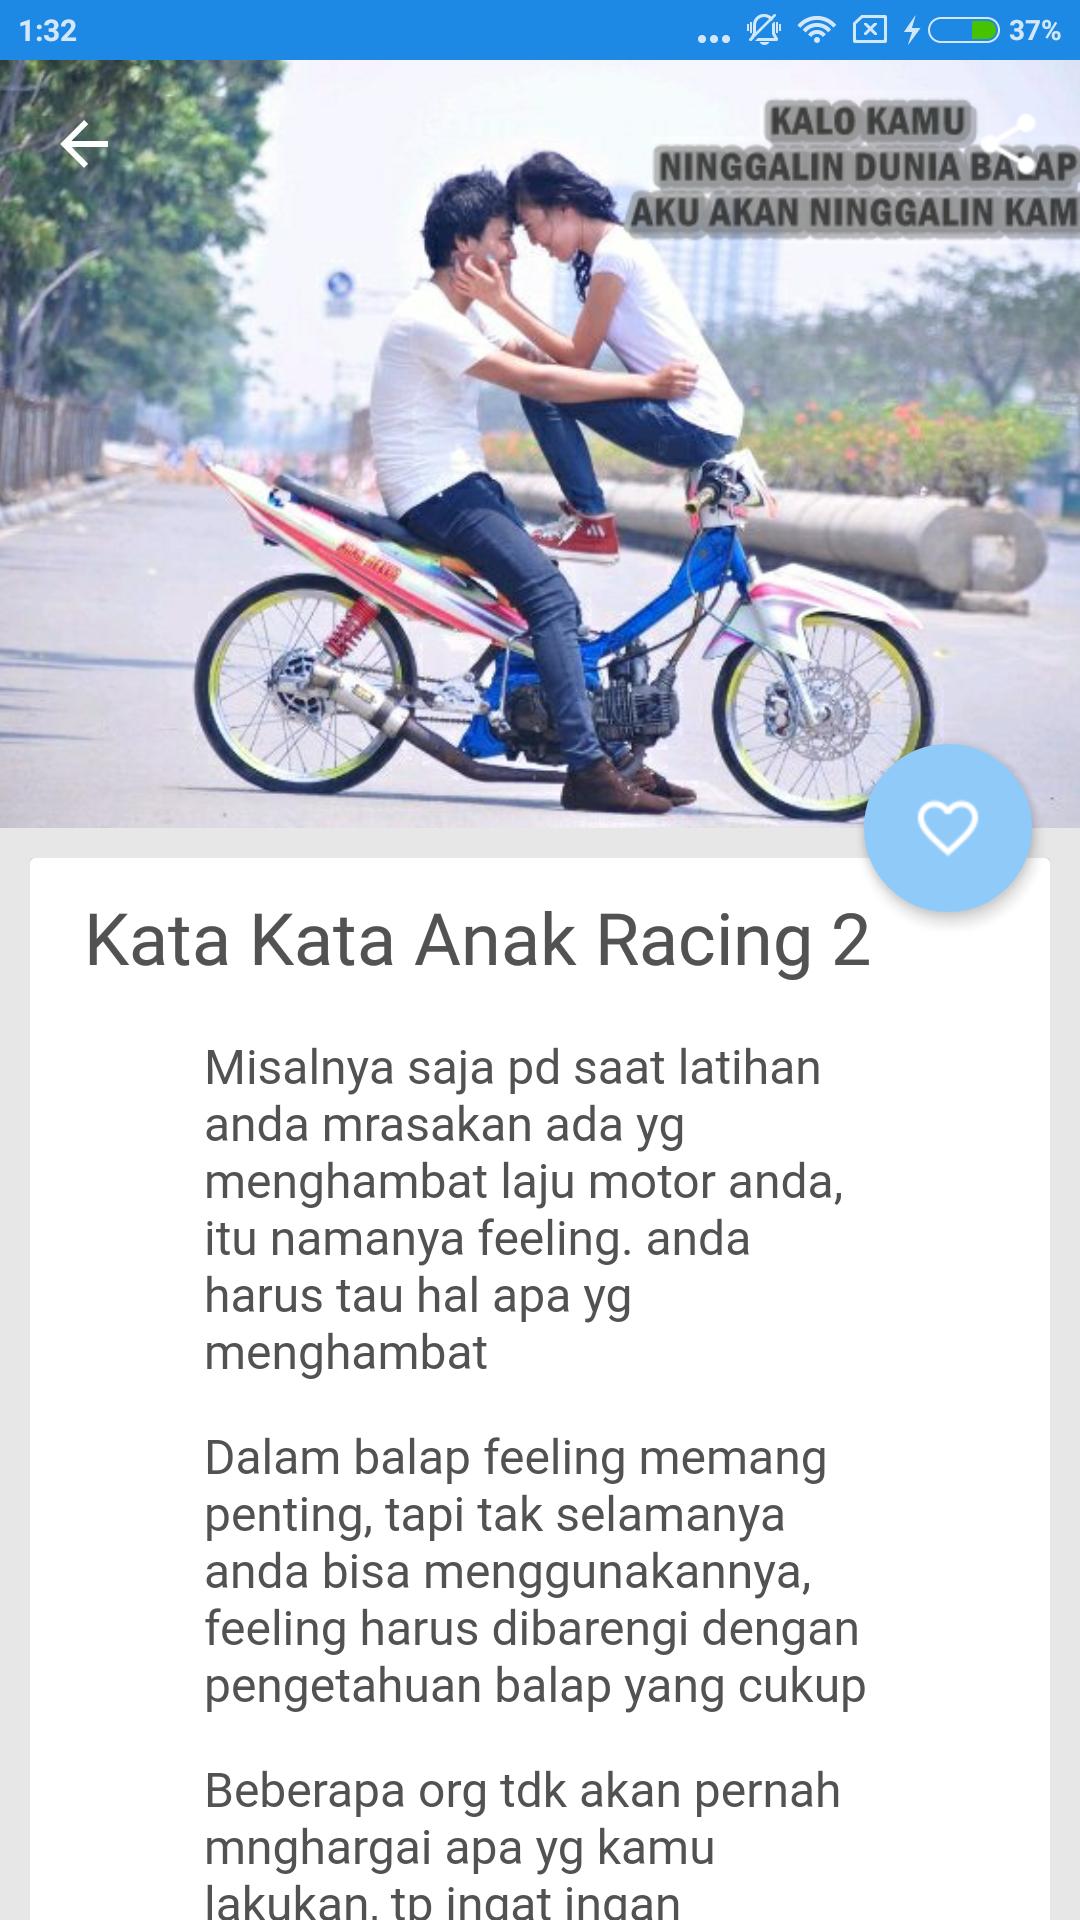 Kata Kata Anak Racing For Android Apk Download